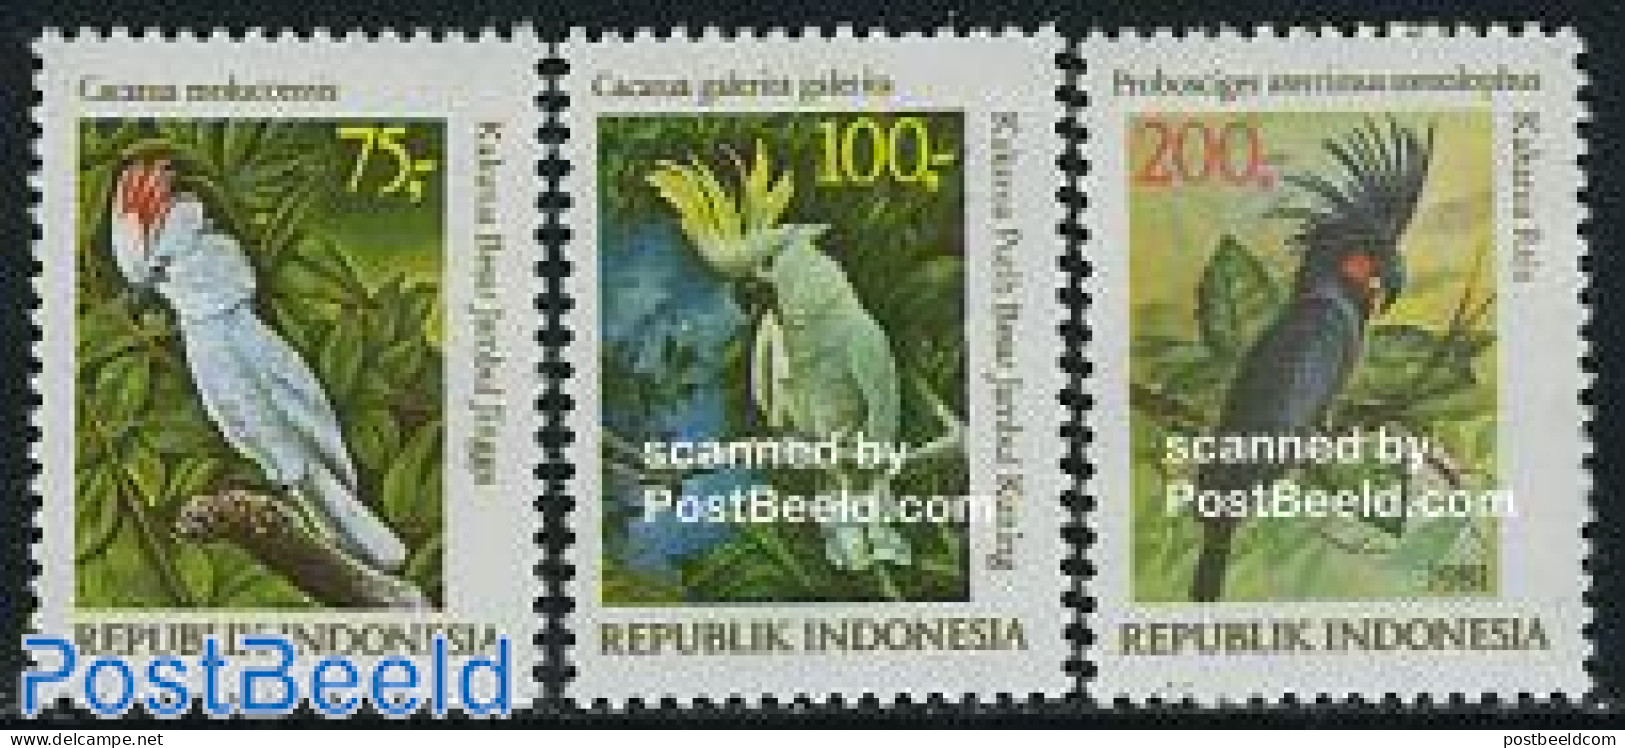 Indonesia 1981 Birds 3v, Mint NH, Nature - Birds - Parrots - Indonesia